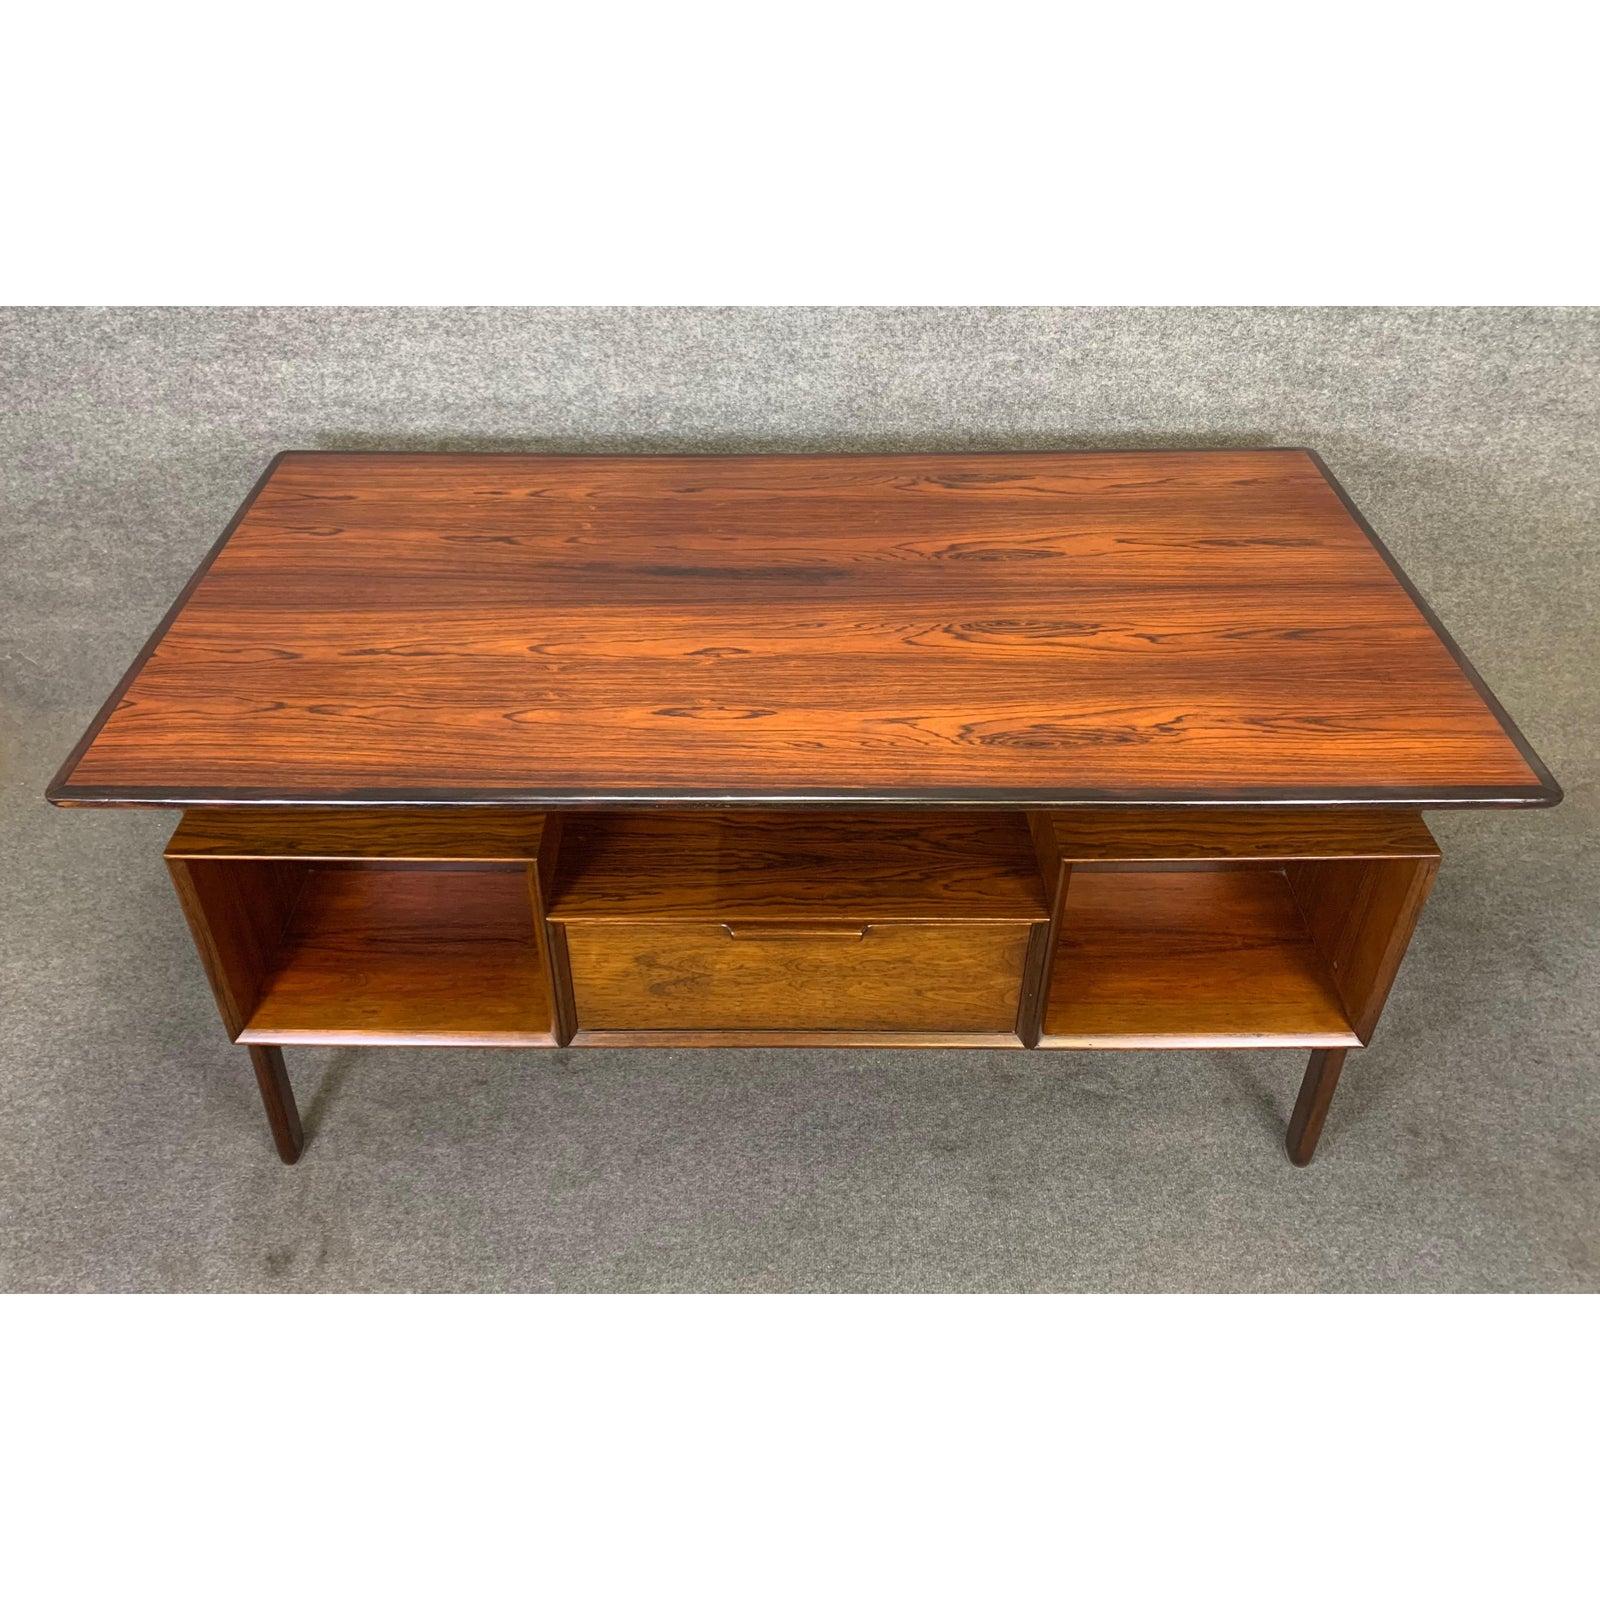 Vintage Danish Midcentury Rosewood Desk Model 75 by Gunni Oman for Omann Jun 1